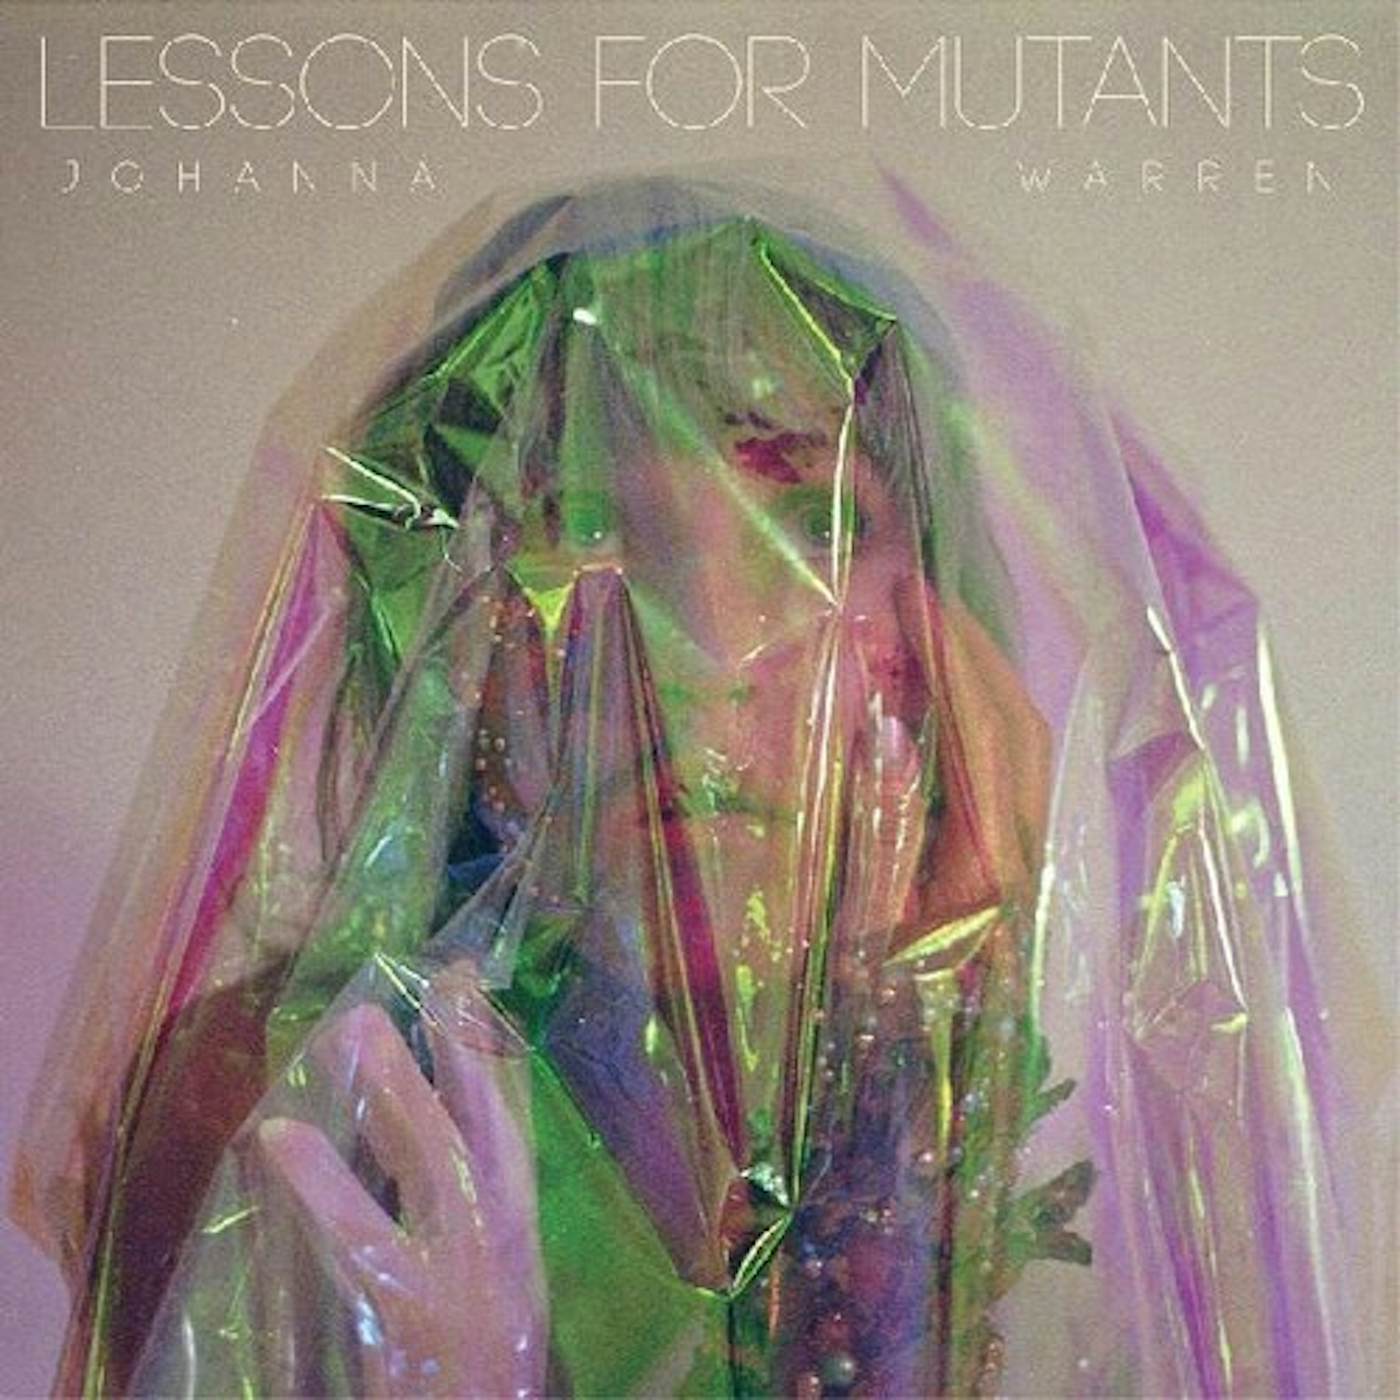 Johanna Warren LESSONS FOR MUTANTS CD